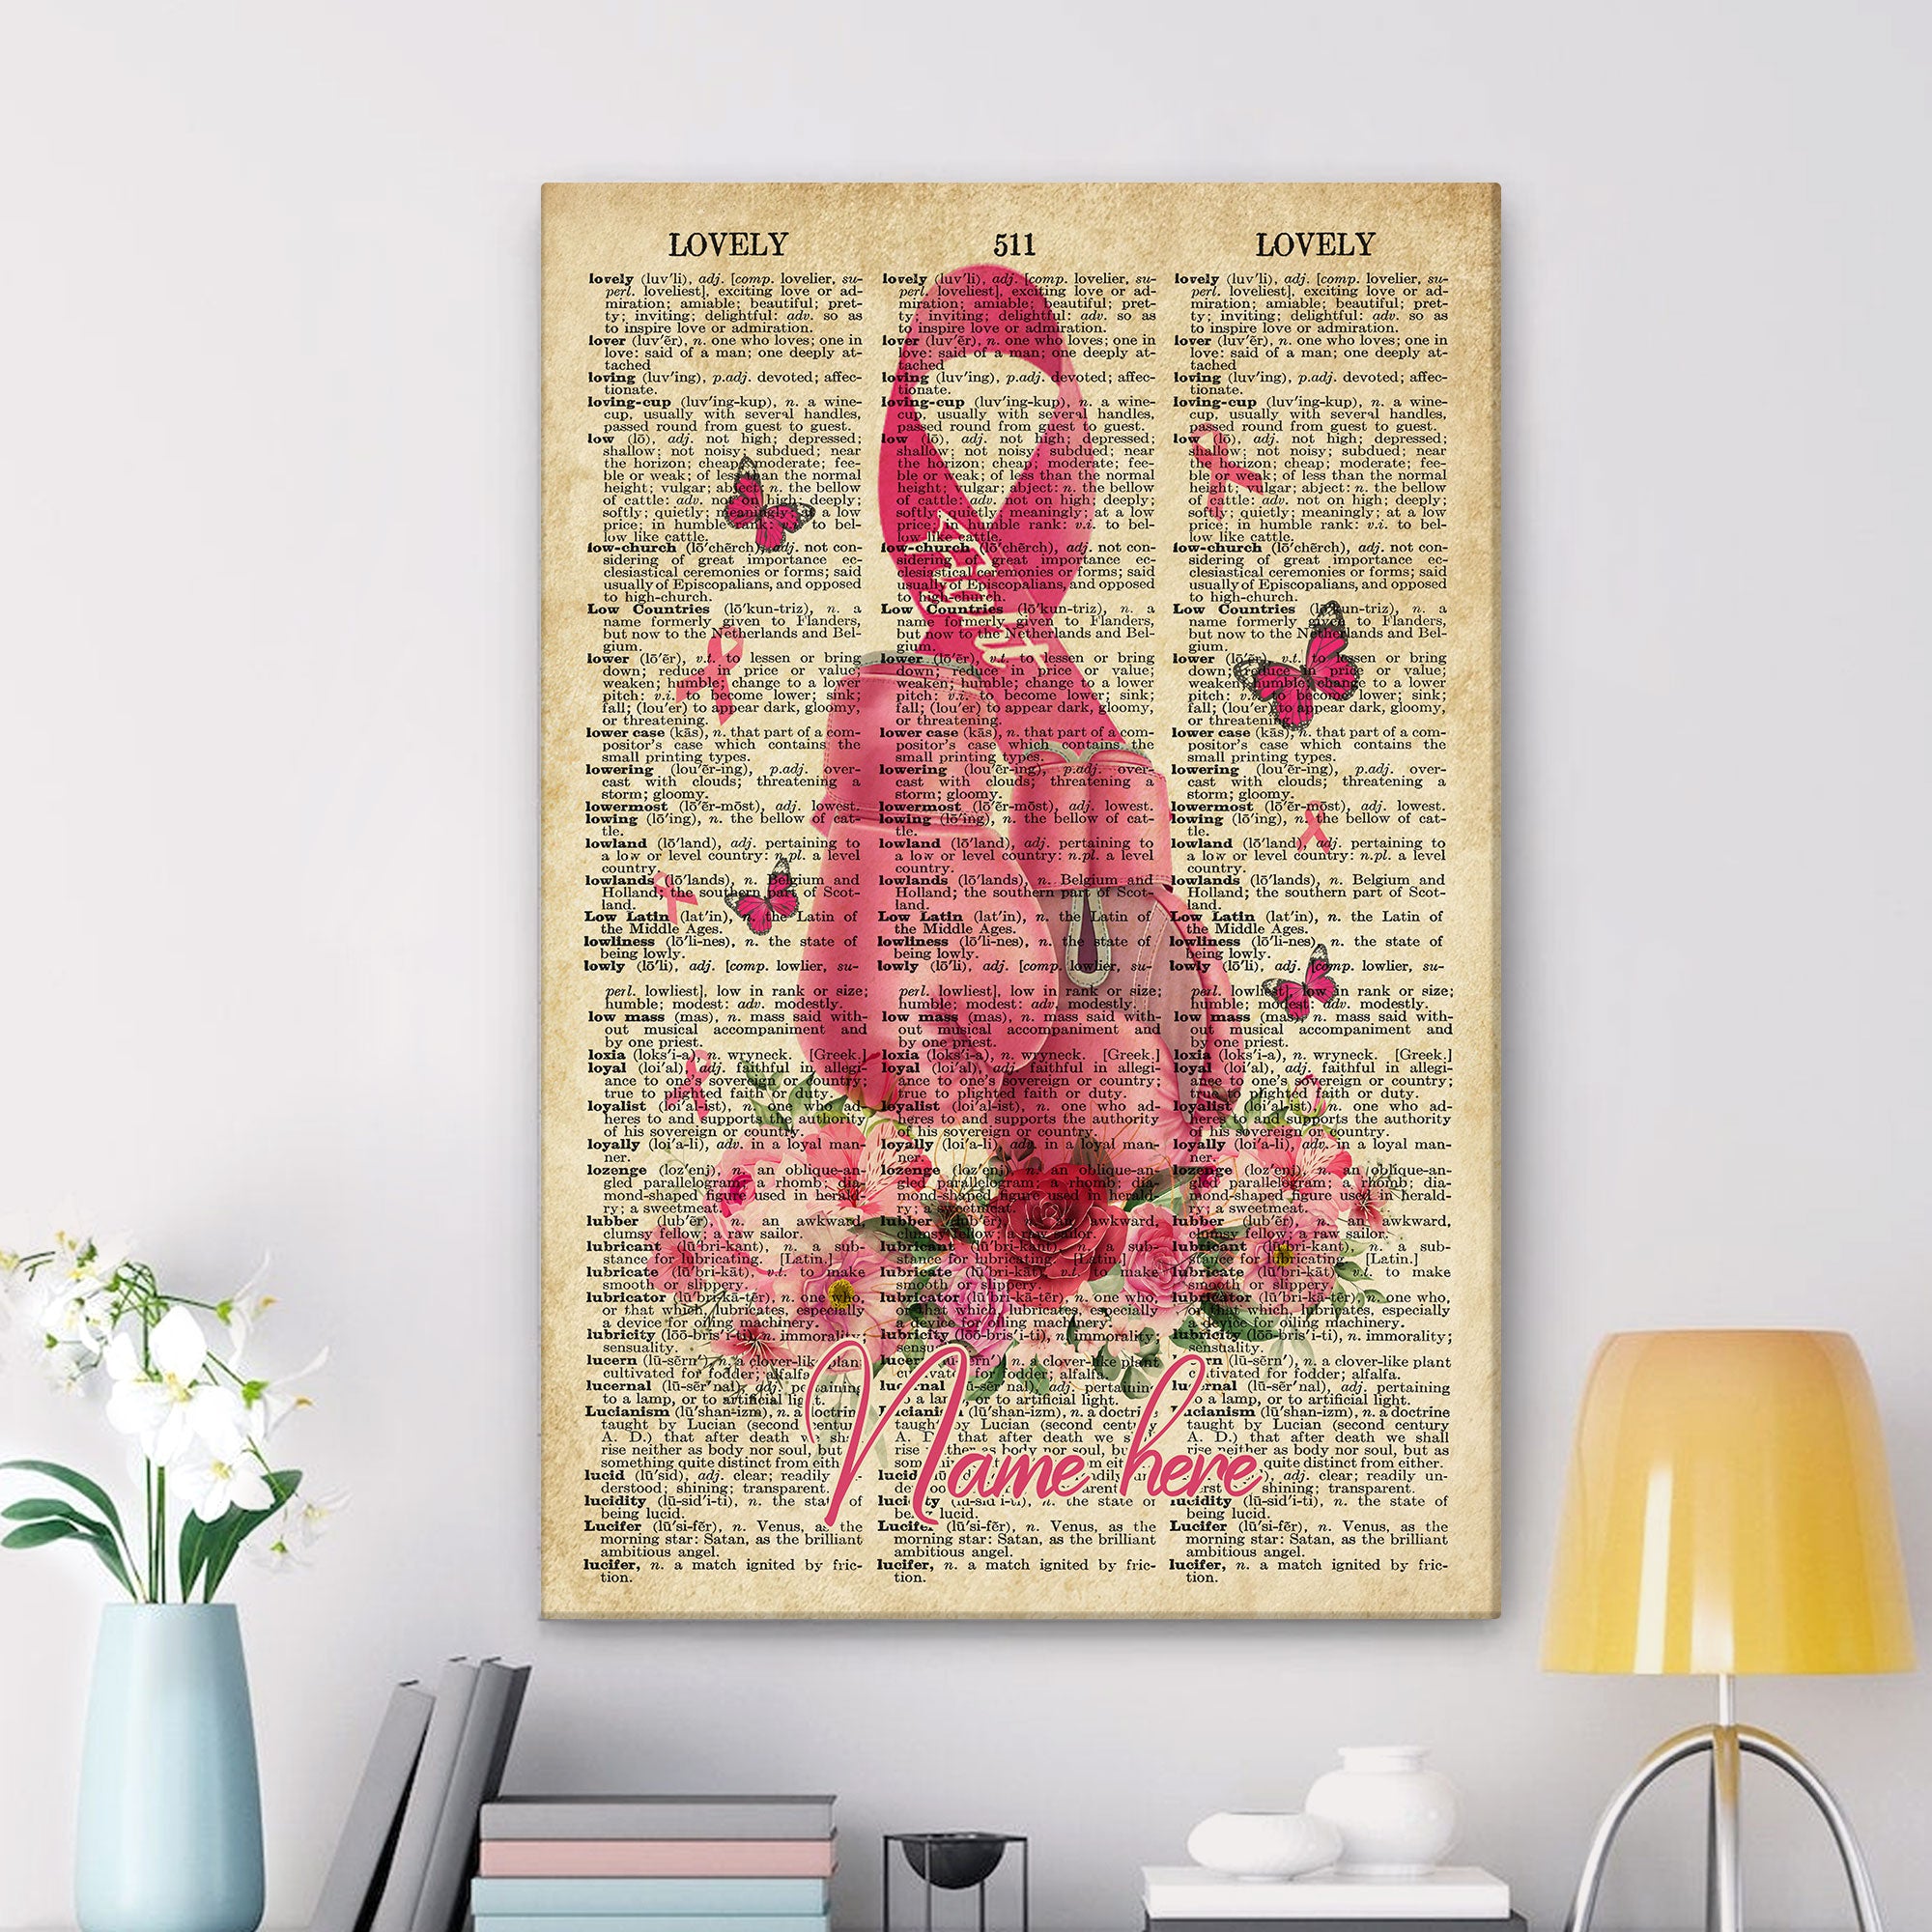 Breast Cancer Survivor - The Girl Creative